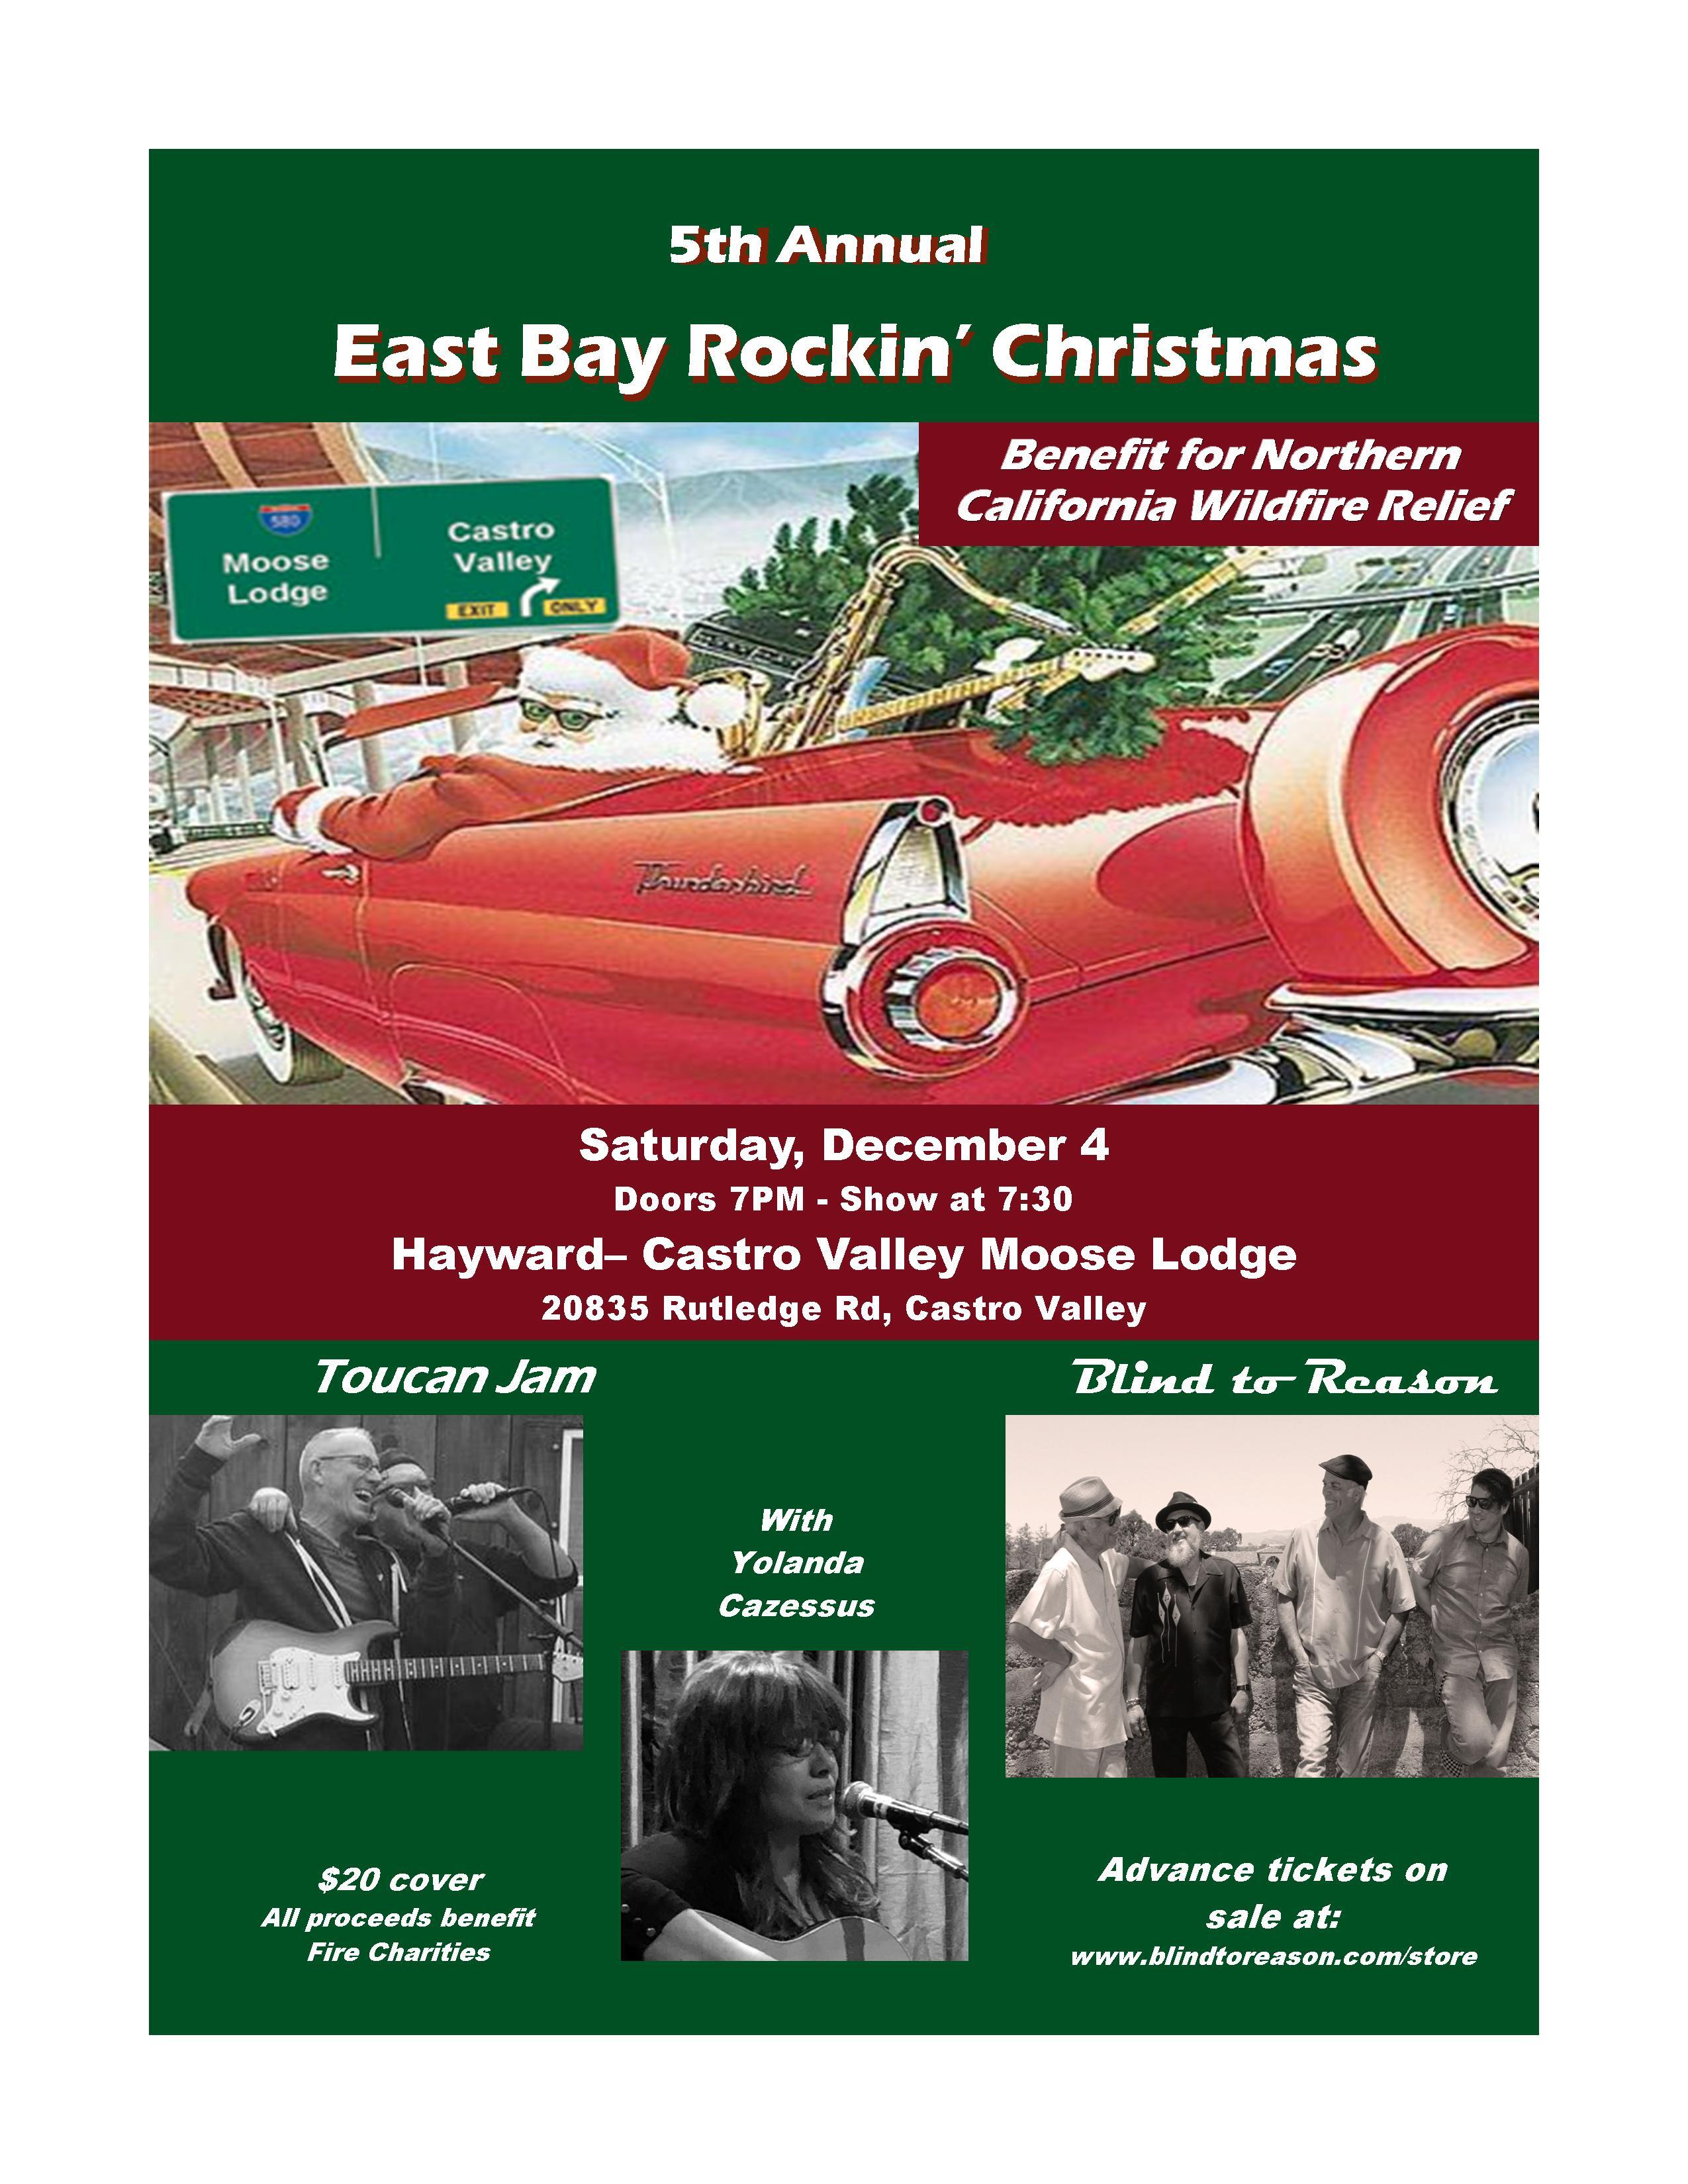 East Bay Rockin' Christmas 2021 00005